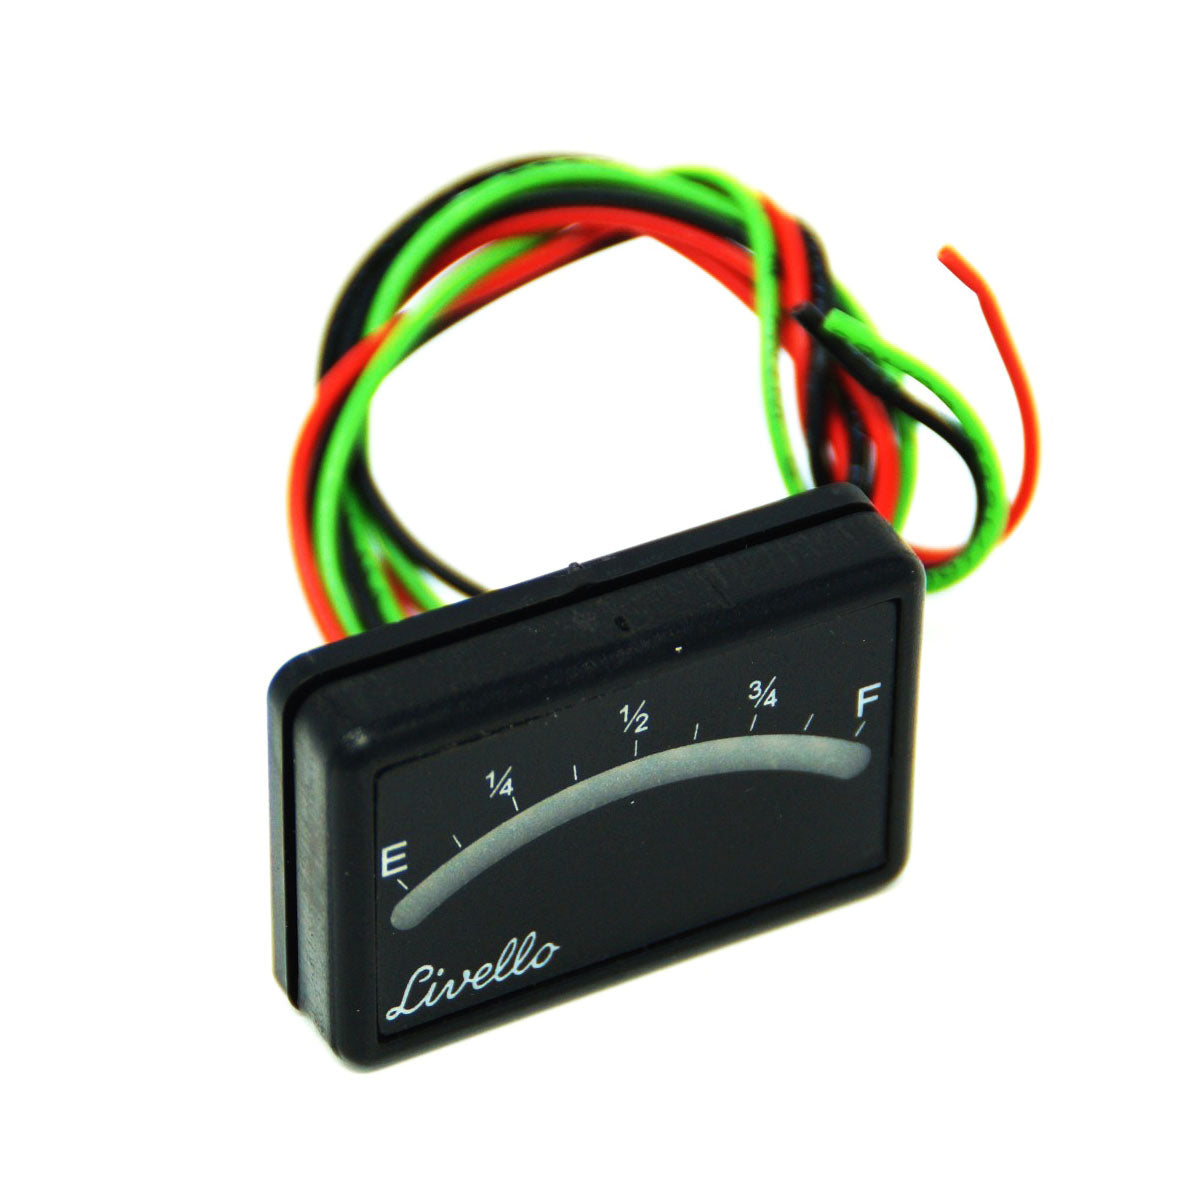 Livello LED gas level indicator with on and off switch + 0-95 ohm sensor